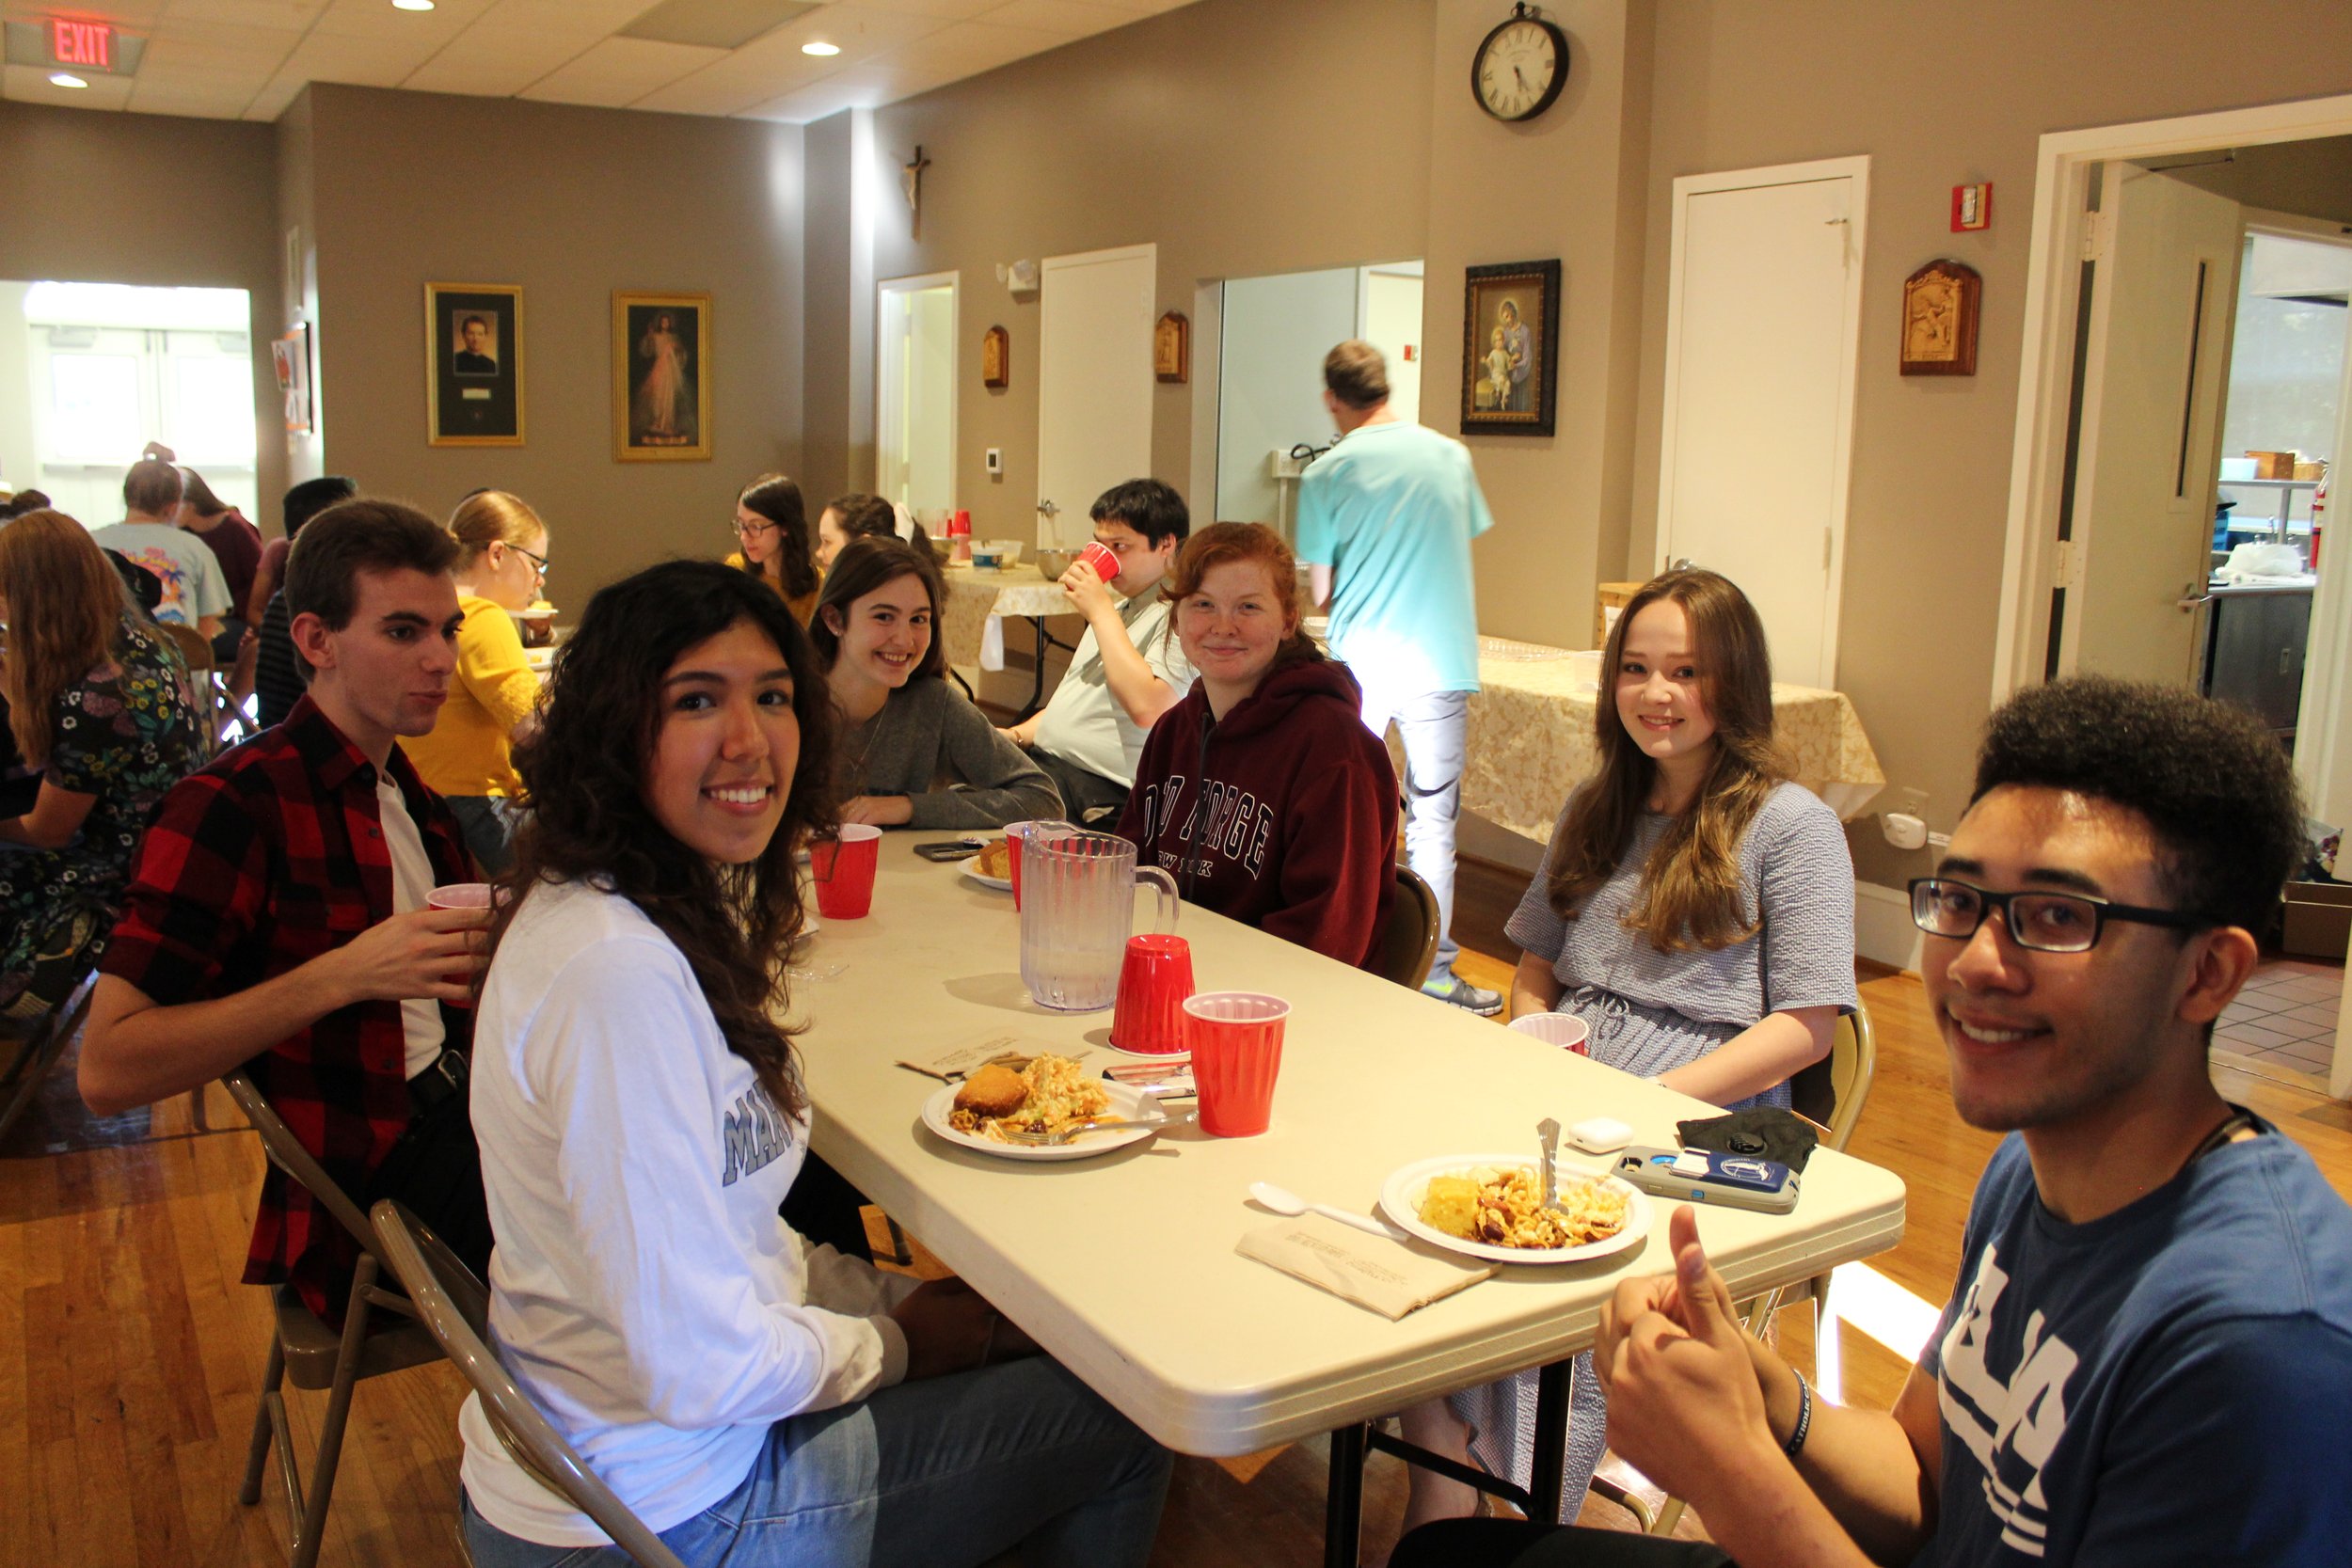  Students enjoying supper social. 